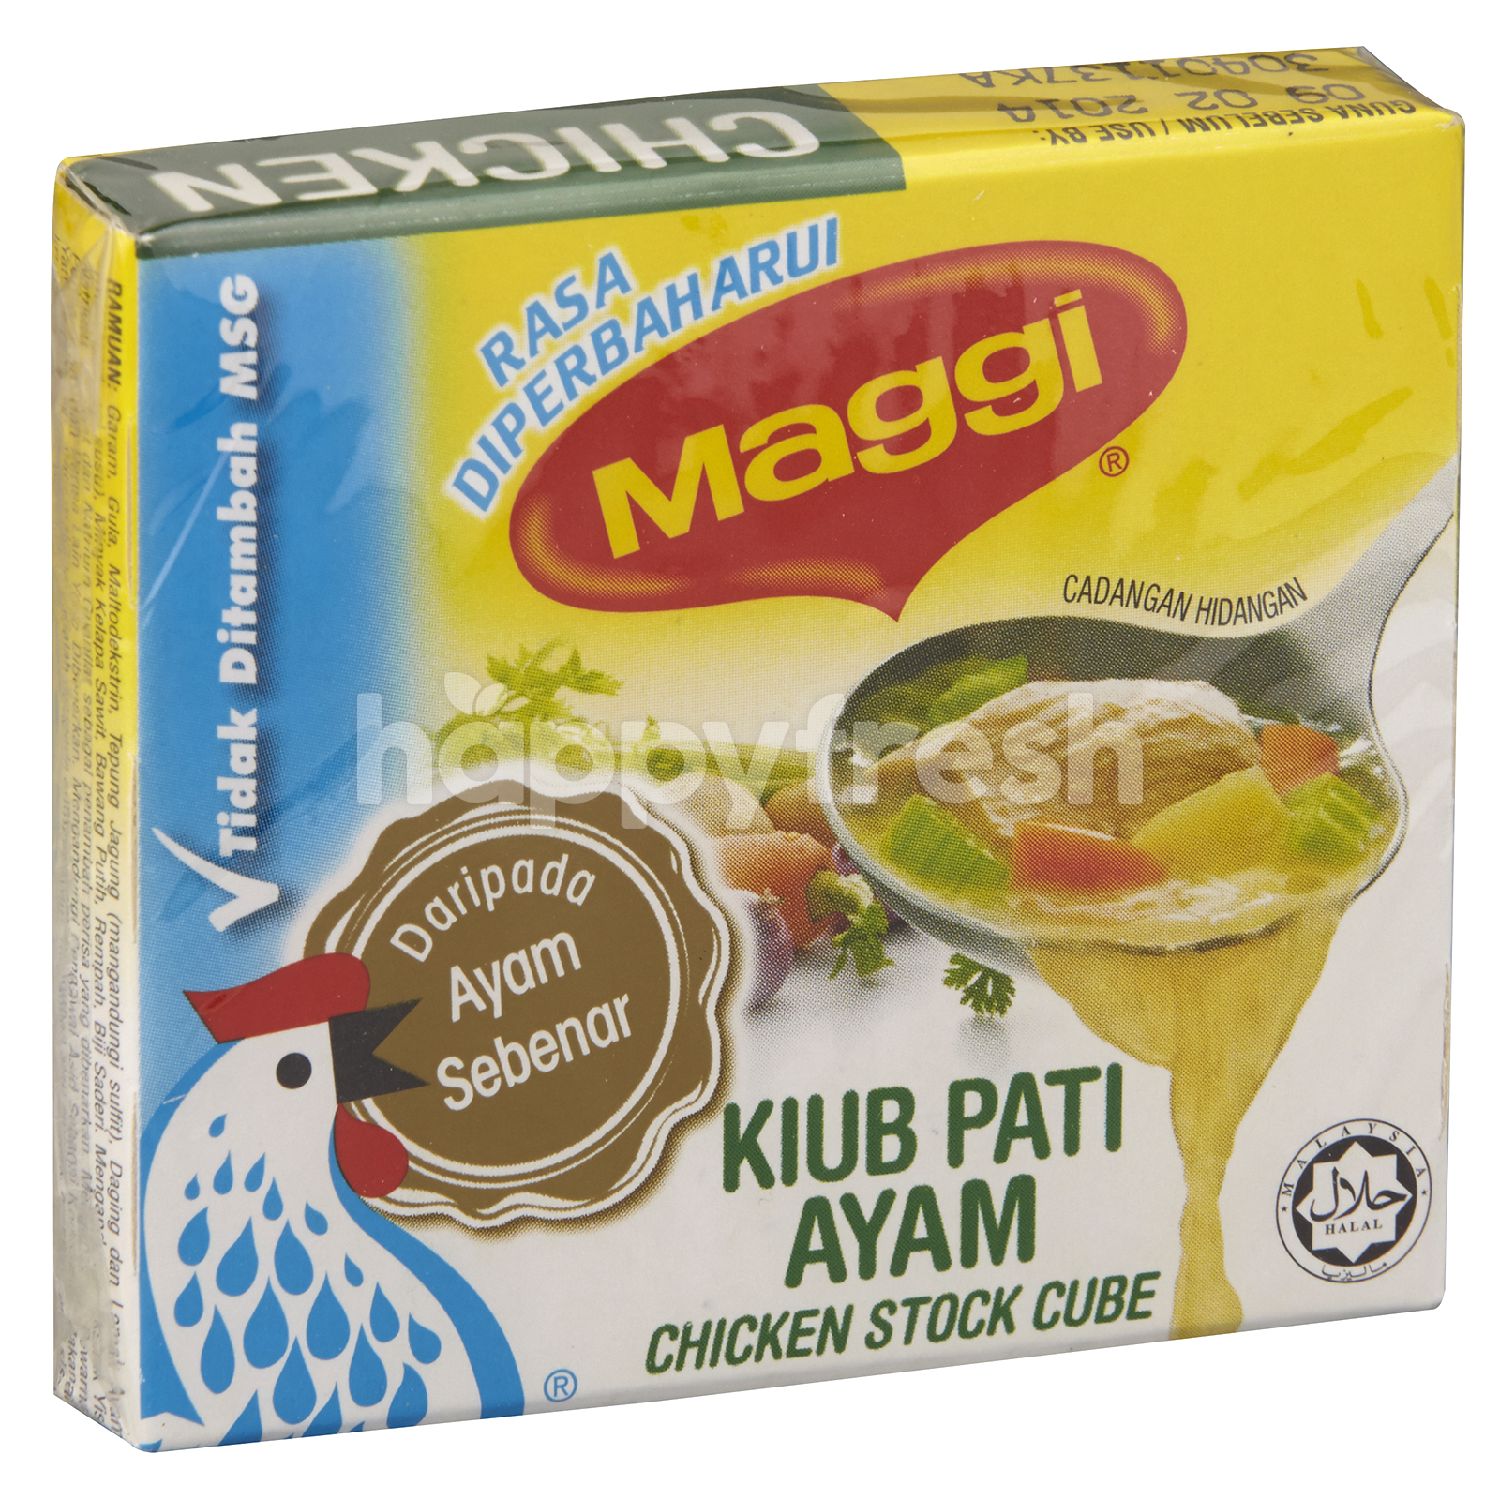 Beli Maggi Chicken Stock Cubes dari Isetan - HappyFresh